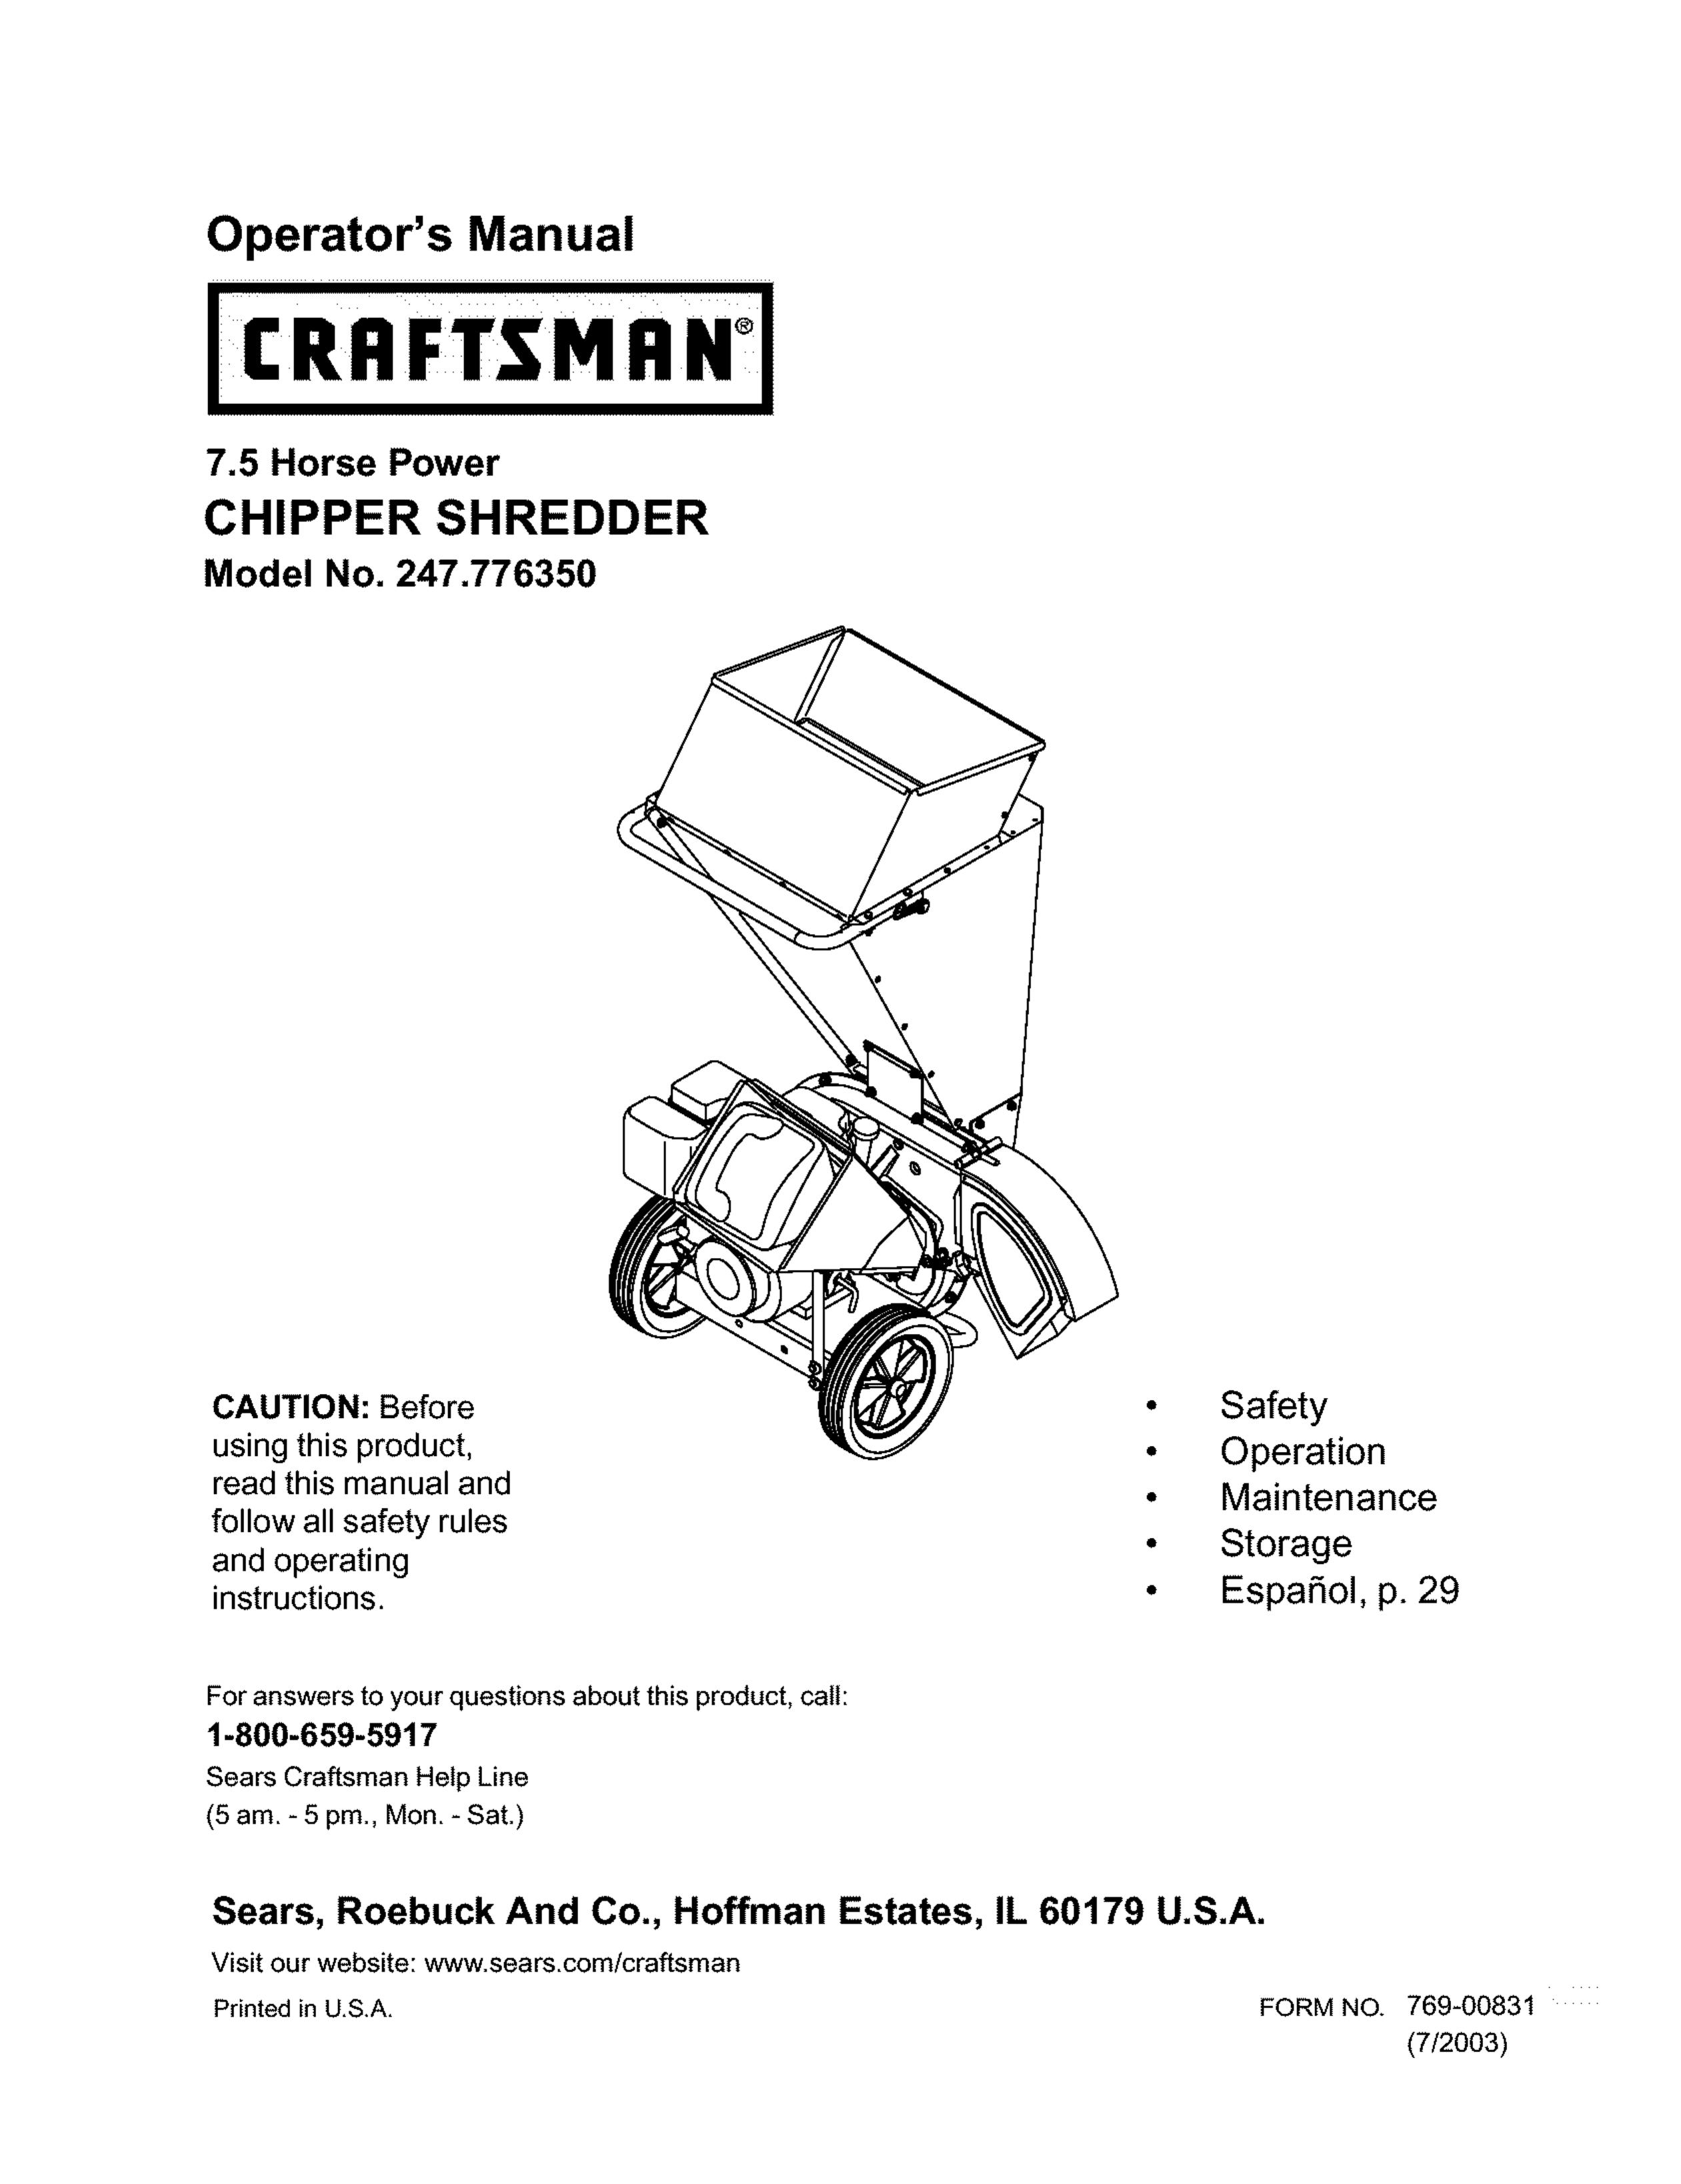 Craftsman 247.776350 Chipper User Manual